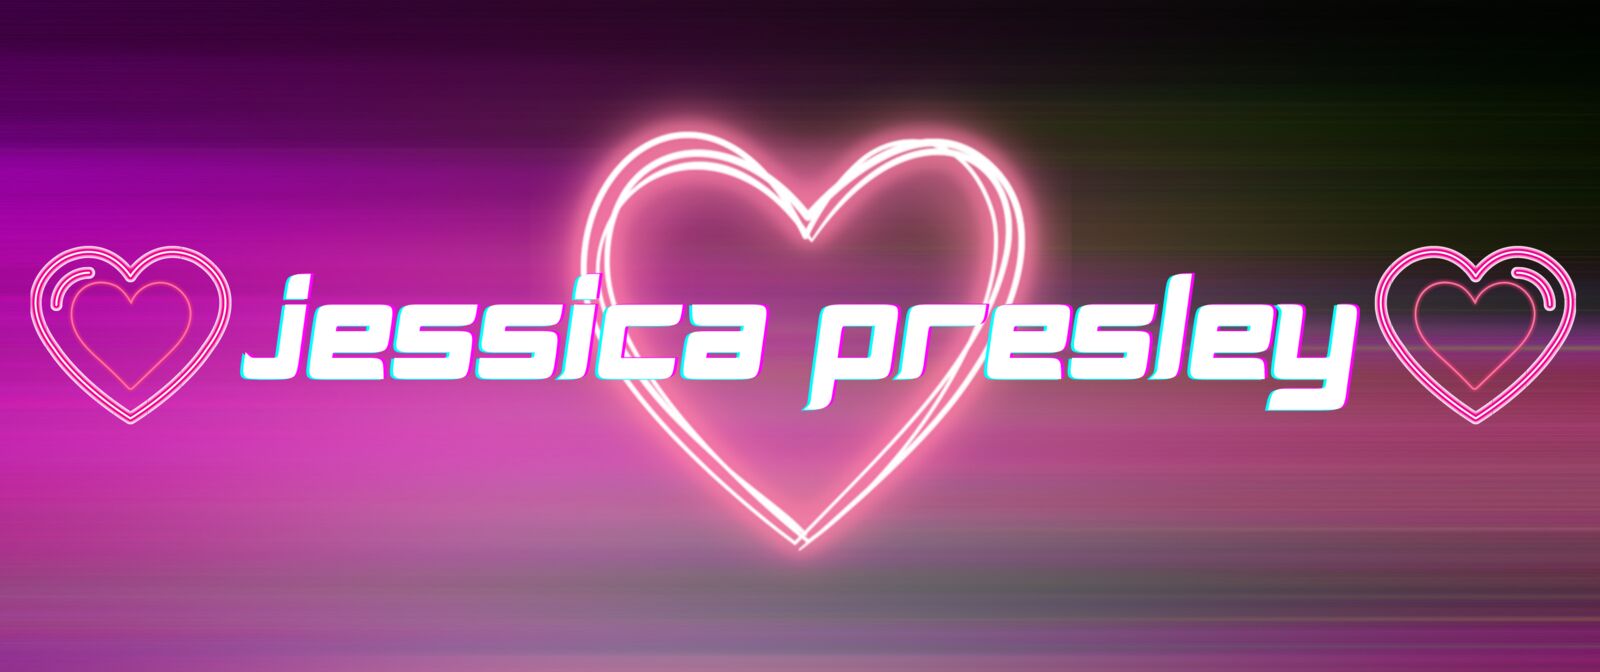 See Jessica Presley profile